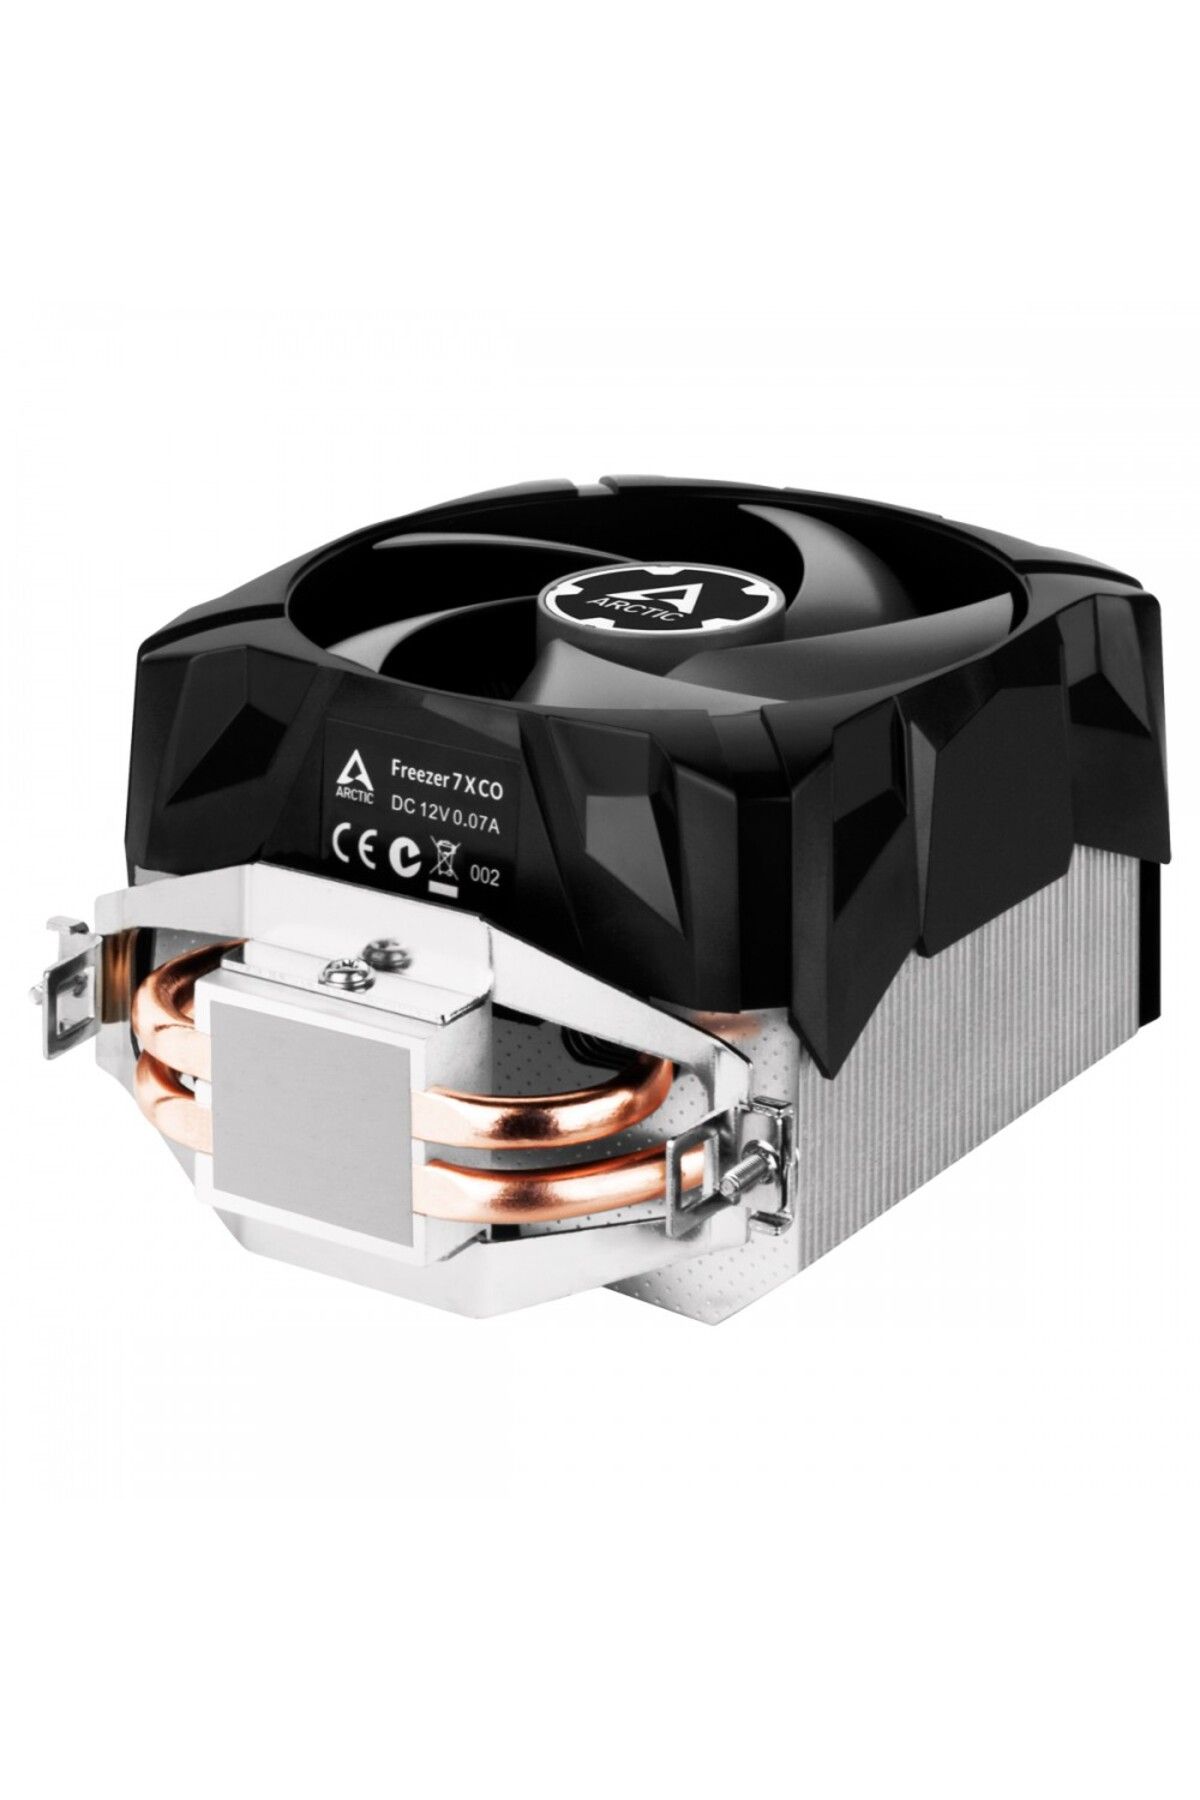 Arctic Freezer 7X CO Compact Multi-Compatible CPU Cooler (ACFRE00085A)